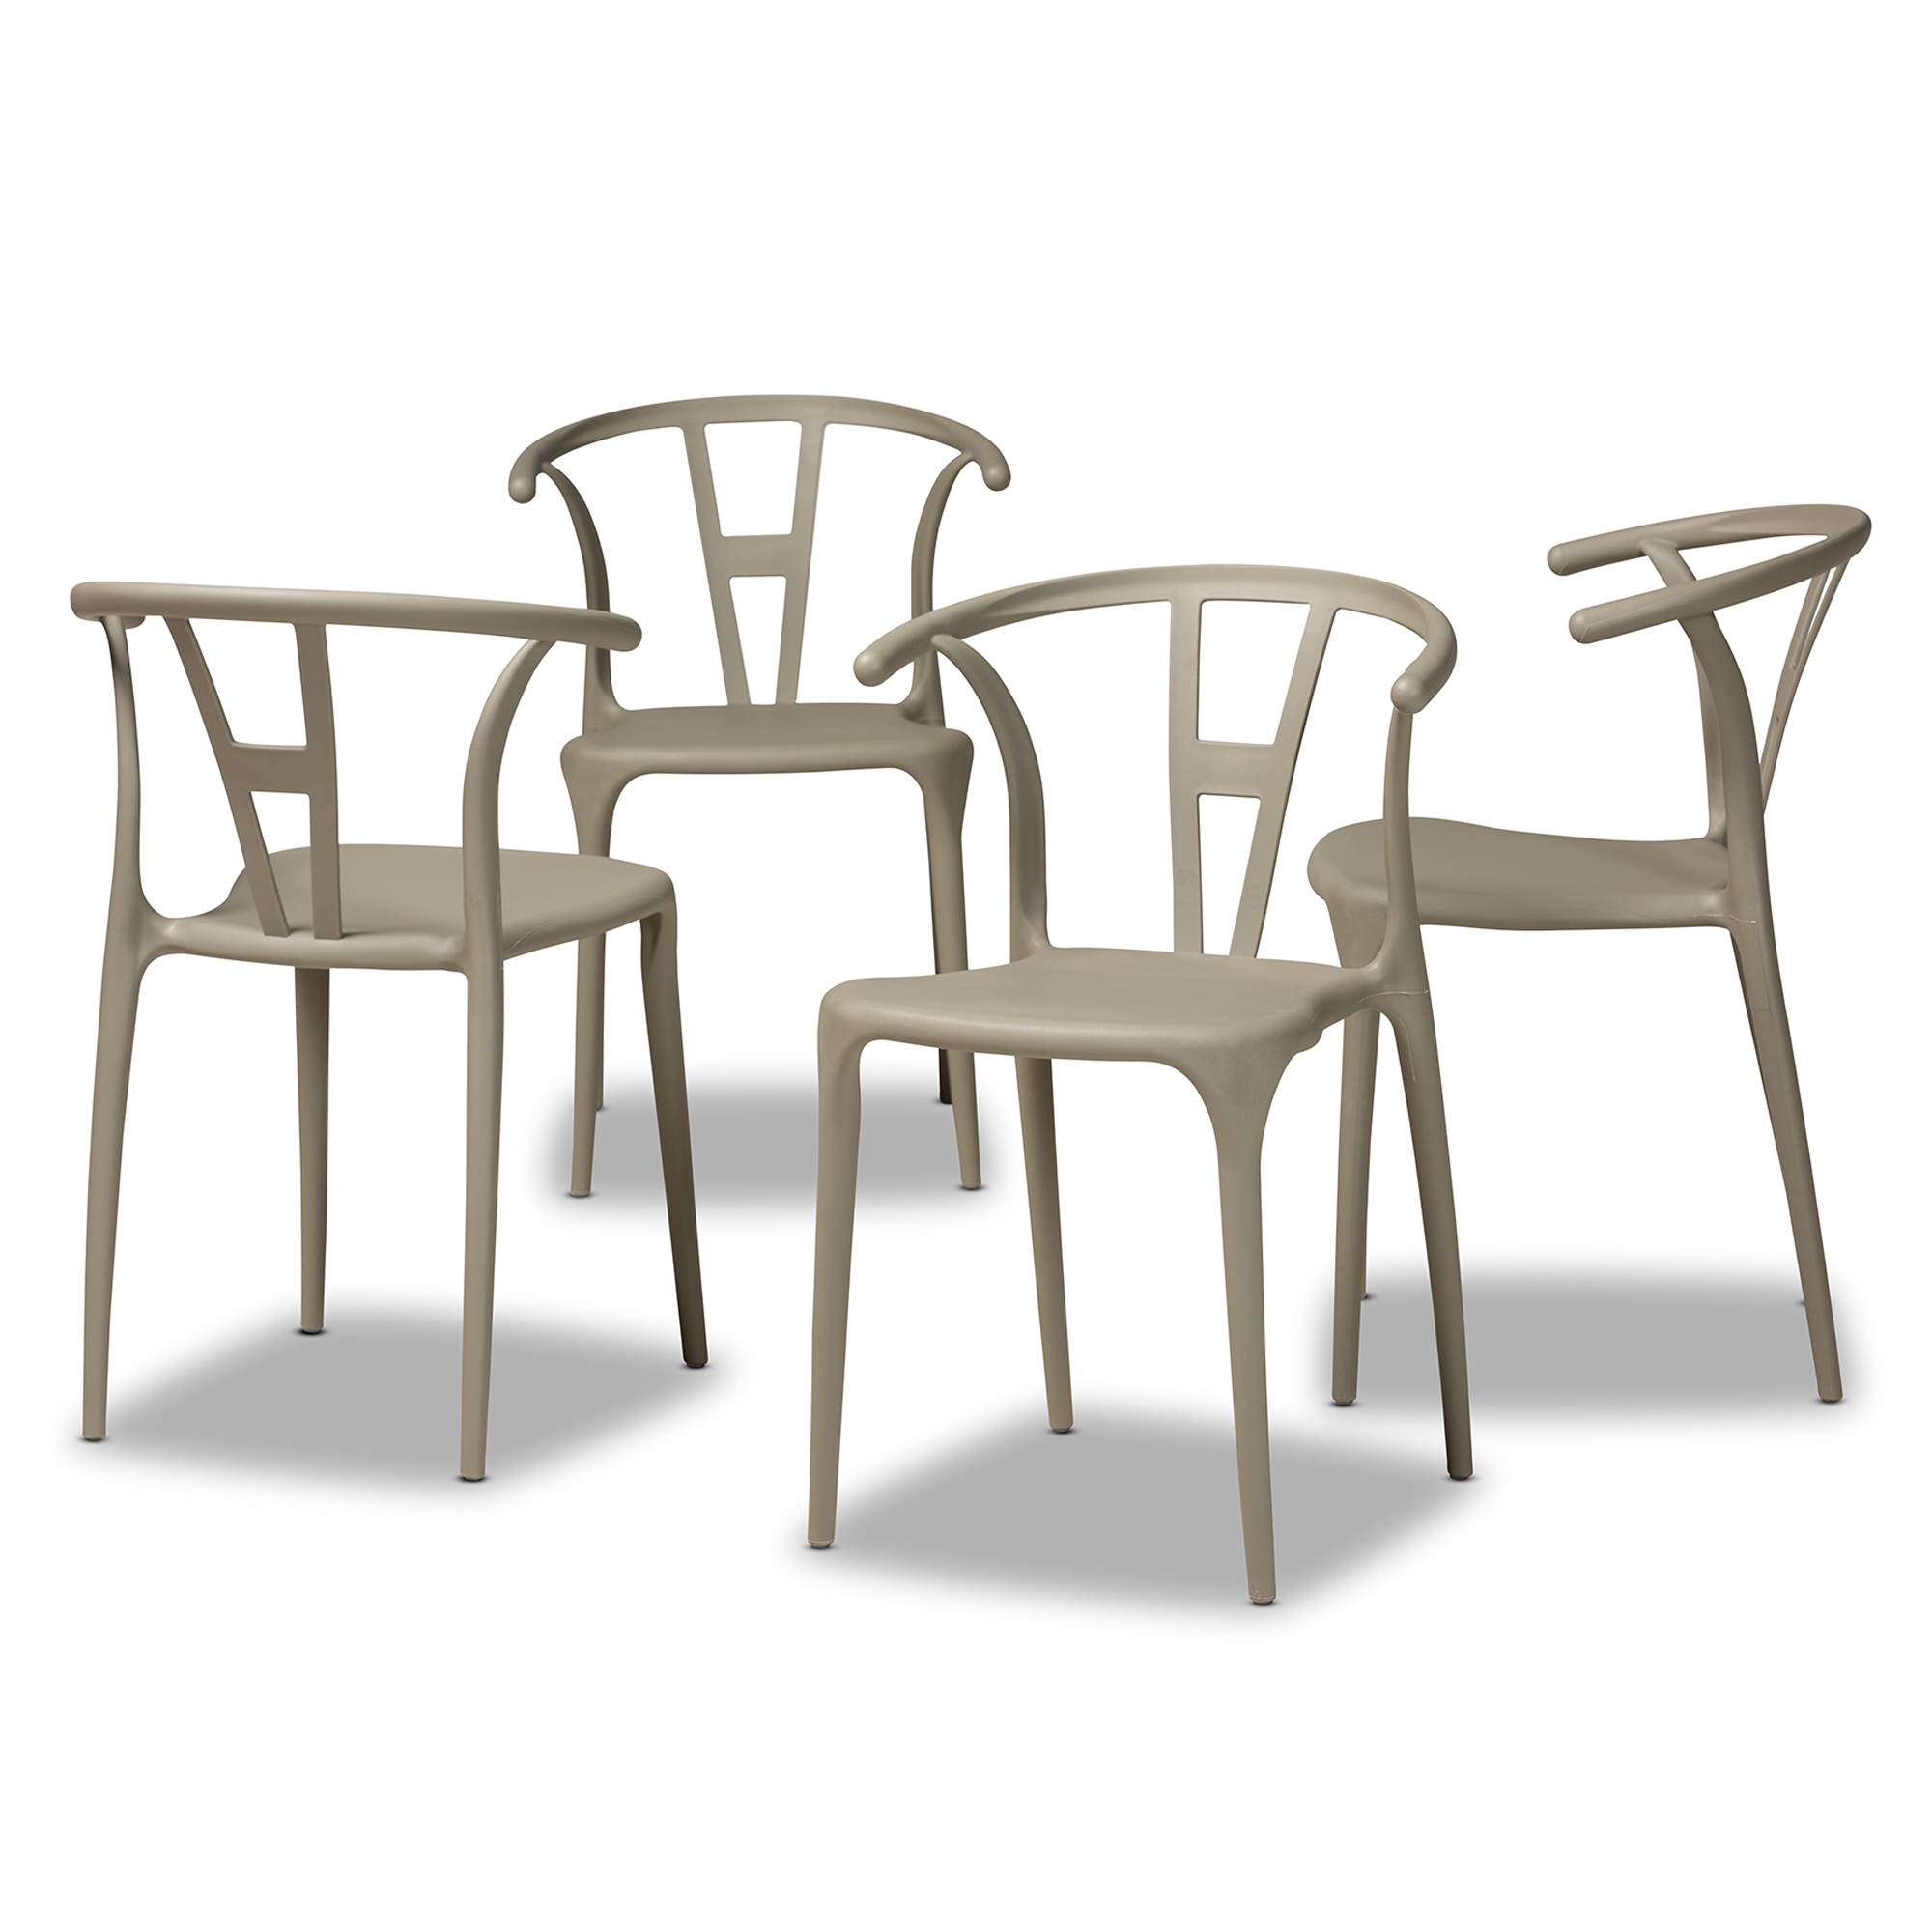 Baxton Studio Warner Modern and Contemporary Beige Plastic 4-Piece Dining Chair Set